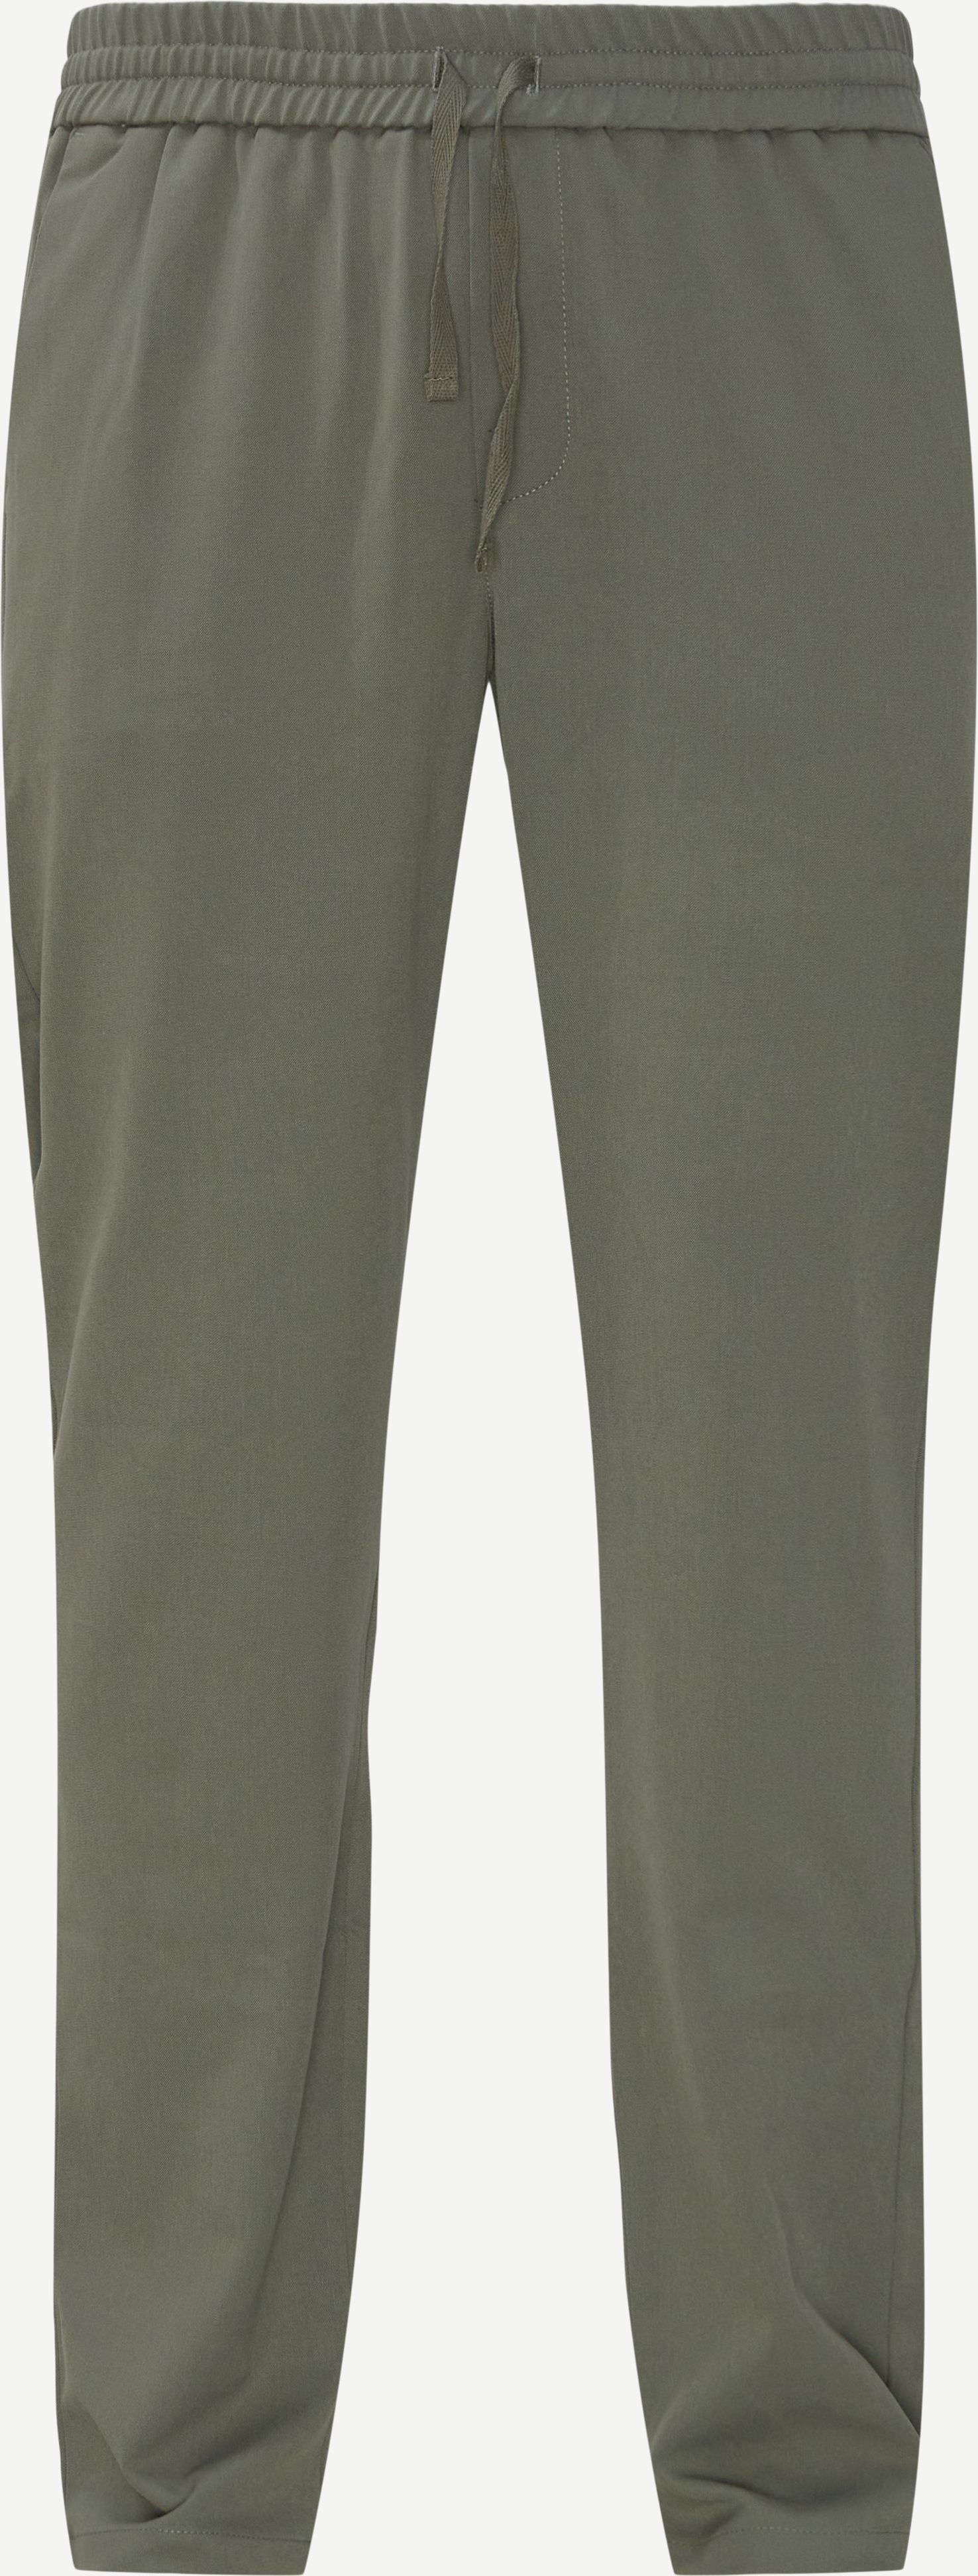 Trousers - Regular fit - Green